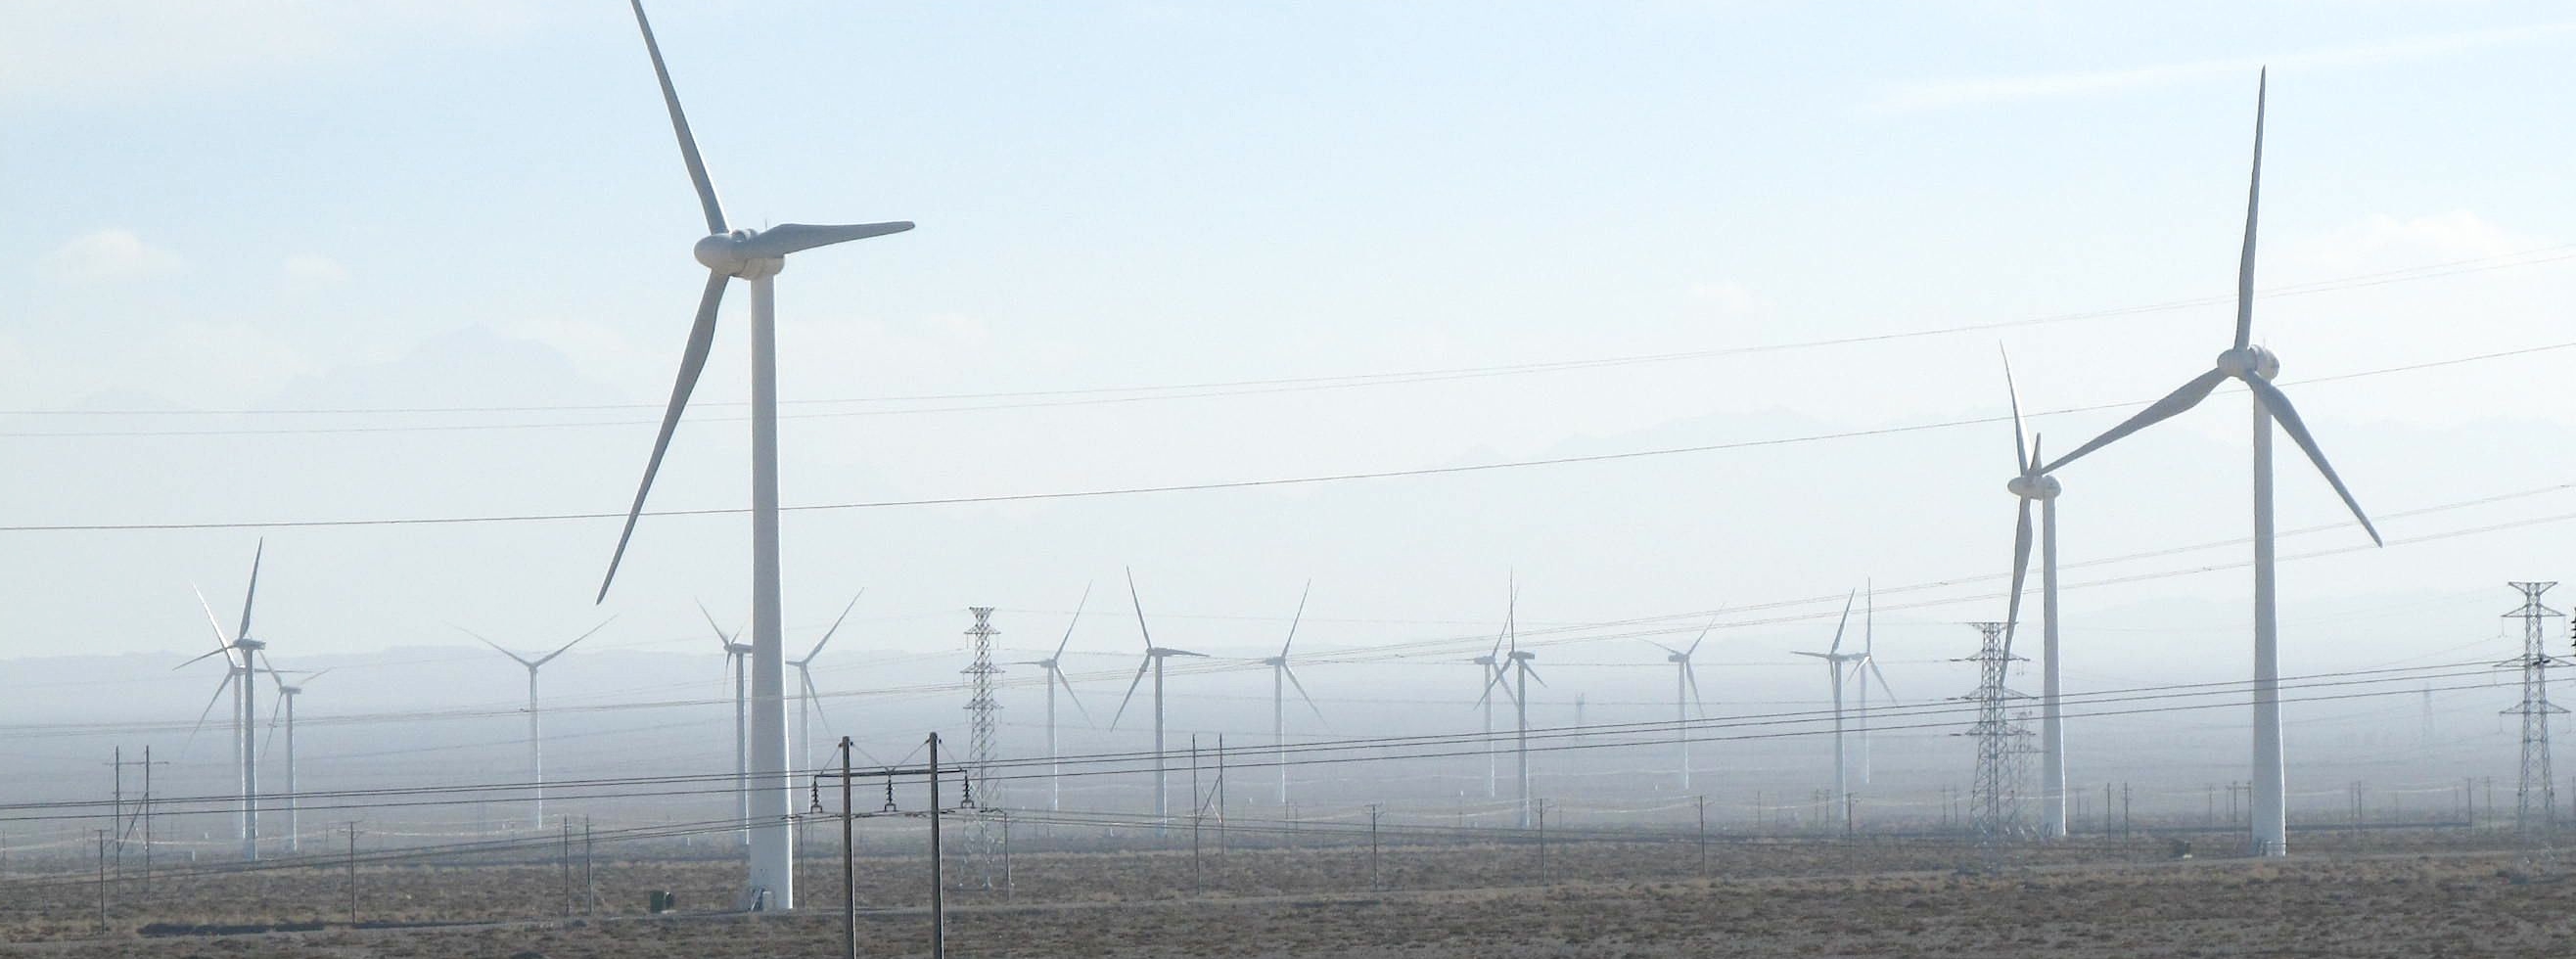 China Water Energy Wind Solar Alternative Renewable Gansu Clean Desert Scarcity